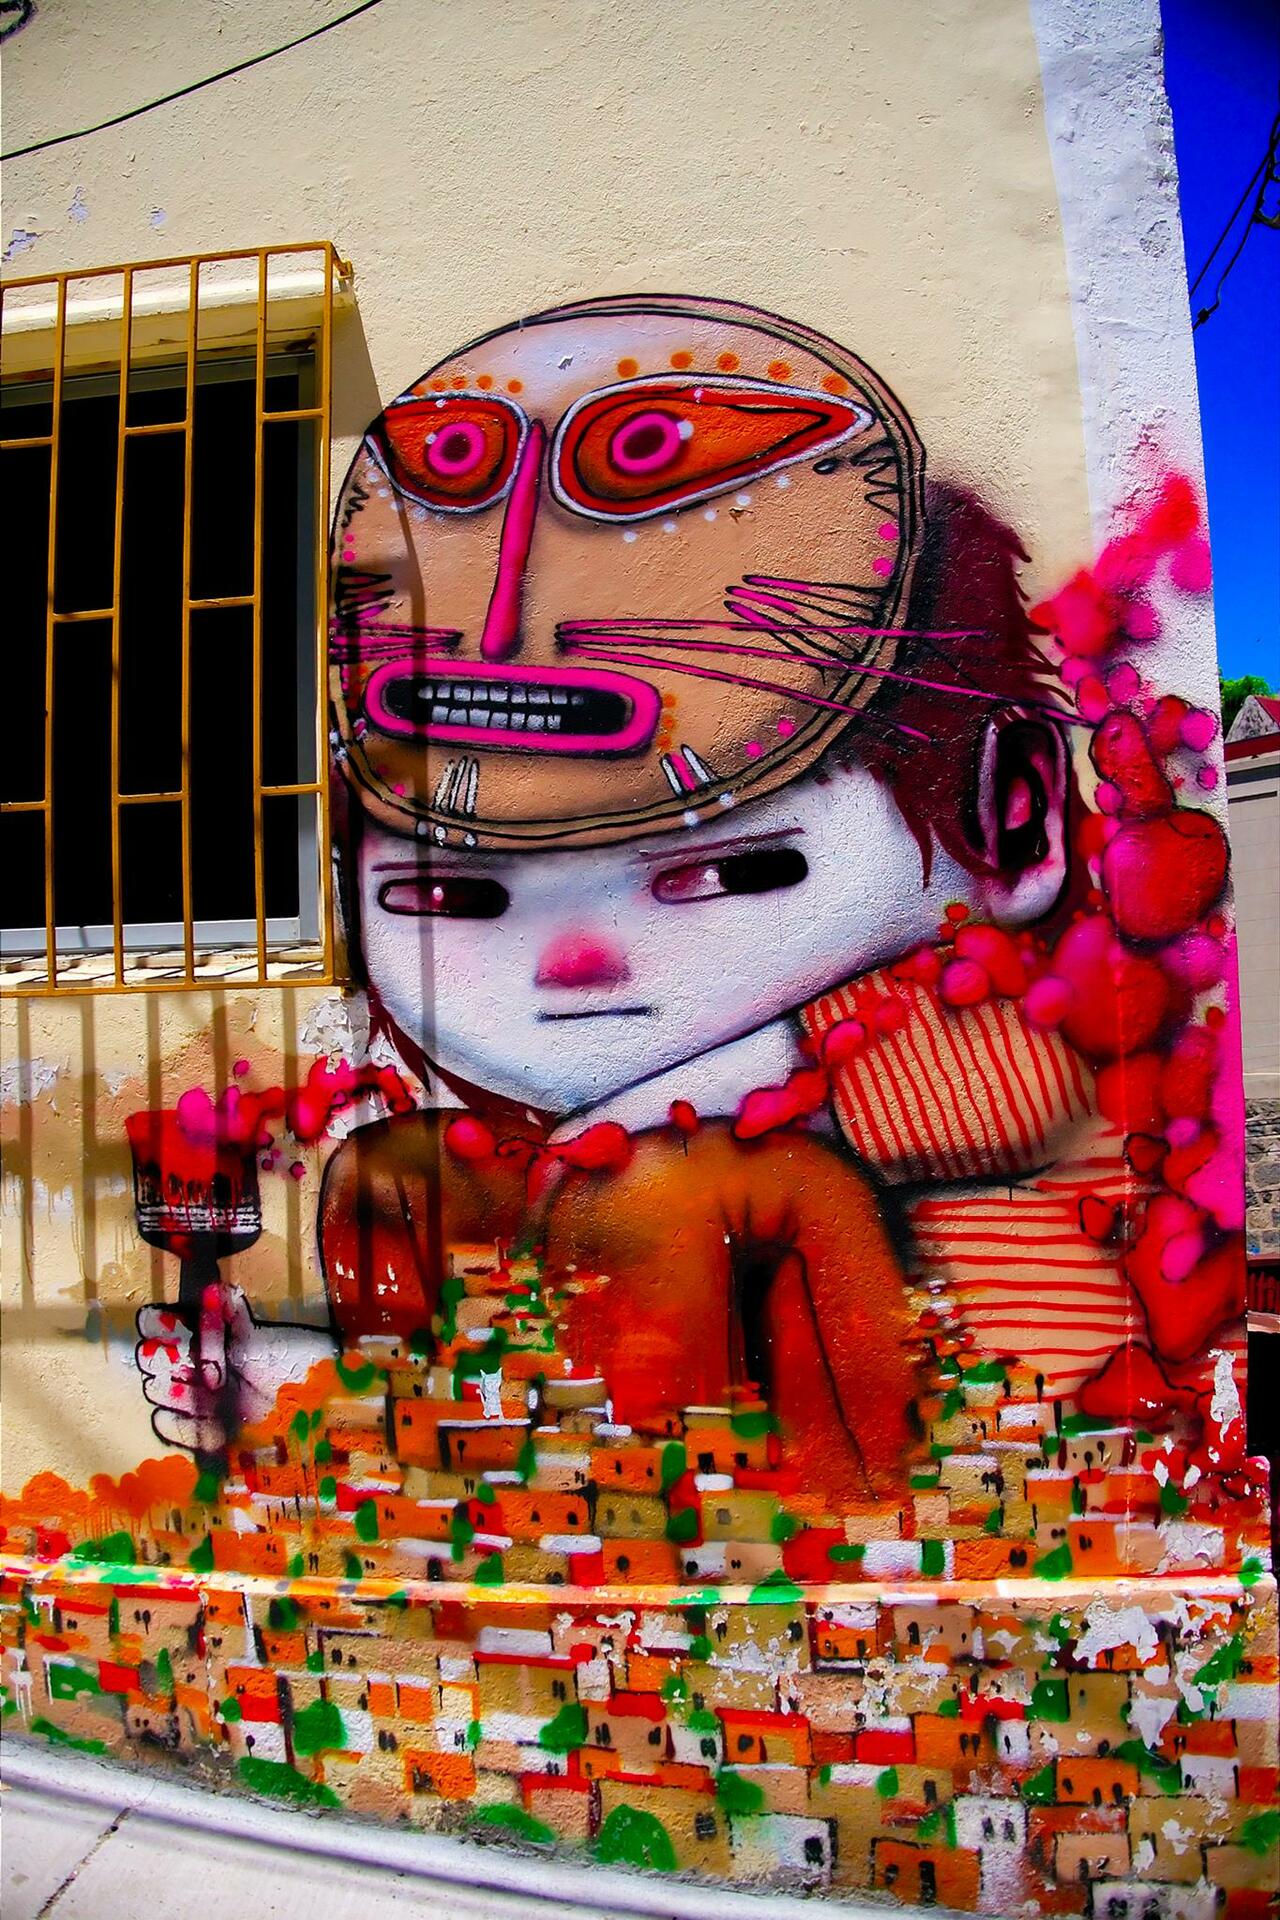 RT @Brindille_: #Streetart #urbanart #graffiti #painting #mural Valparaiso, Chile http://t.co/DFogbM2OaV